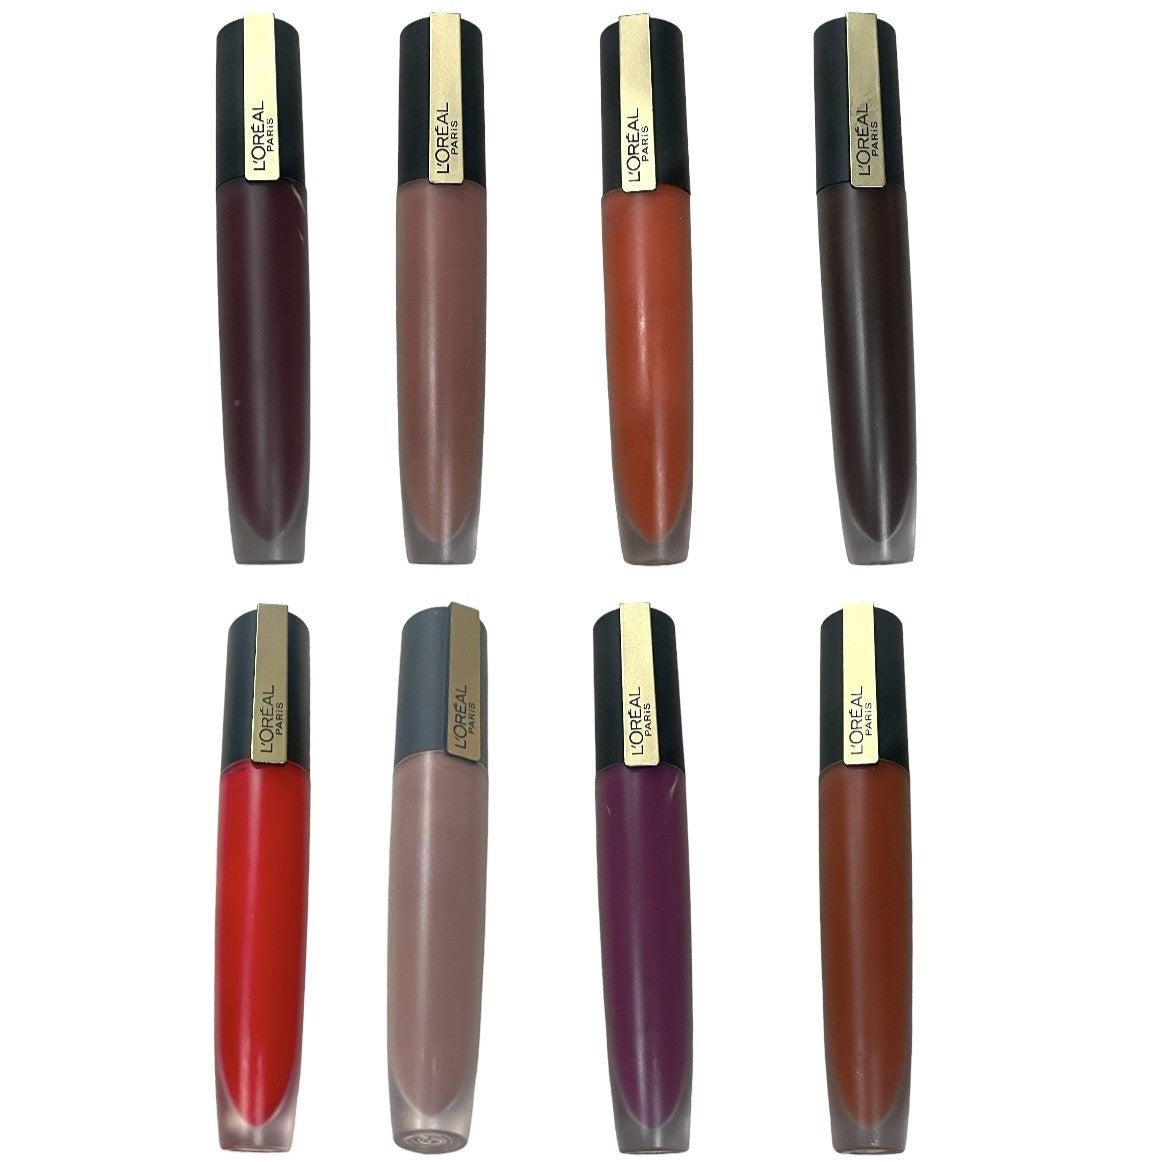 Shelf Pull Makeup L'Oreal Rouge Signature Matte Lip Stain, Assorted Shades - 75 Units, cosmetics liquidation wholesale overstock surplus